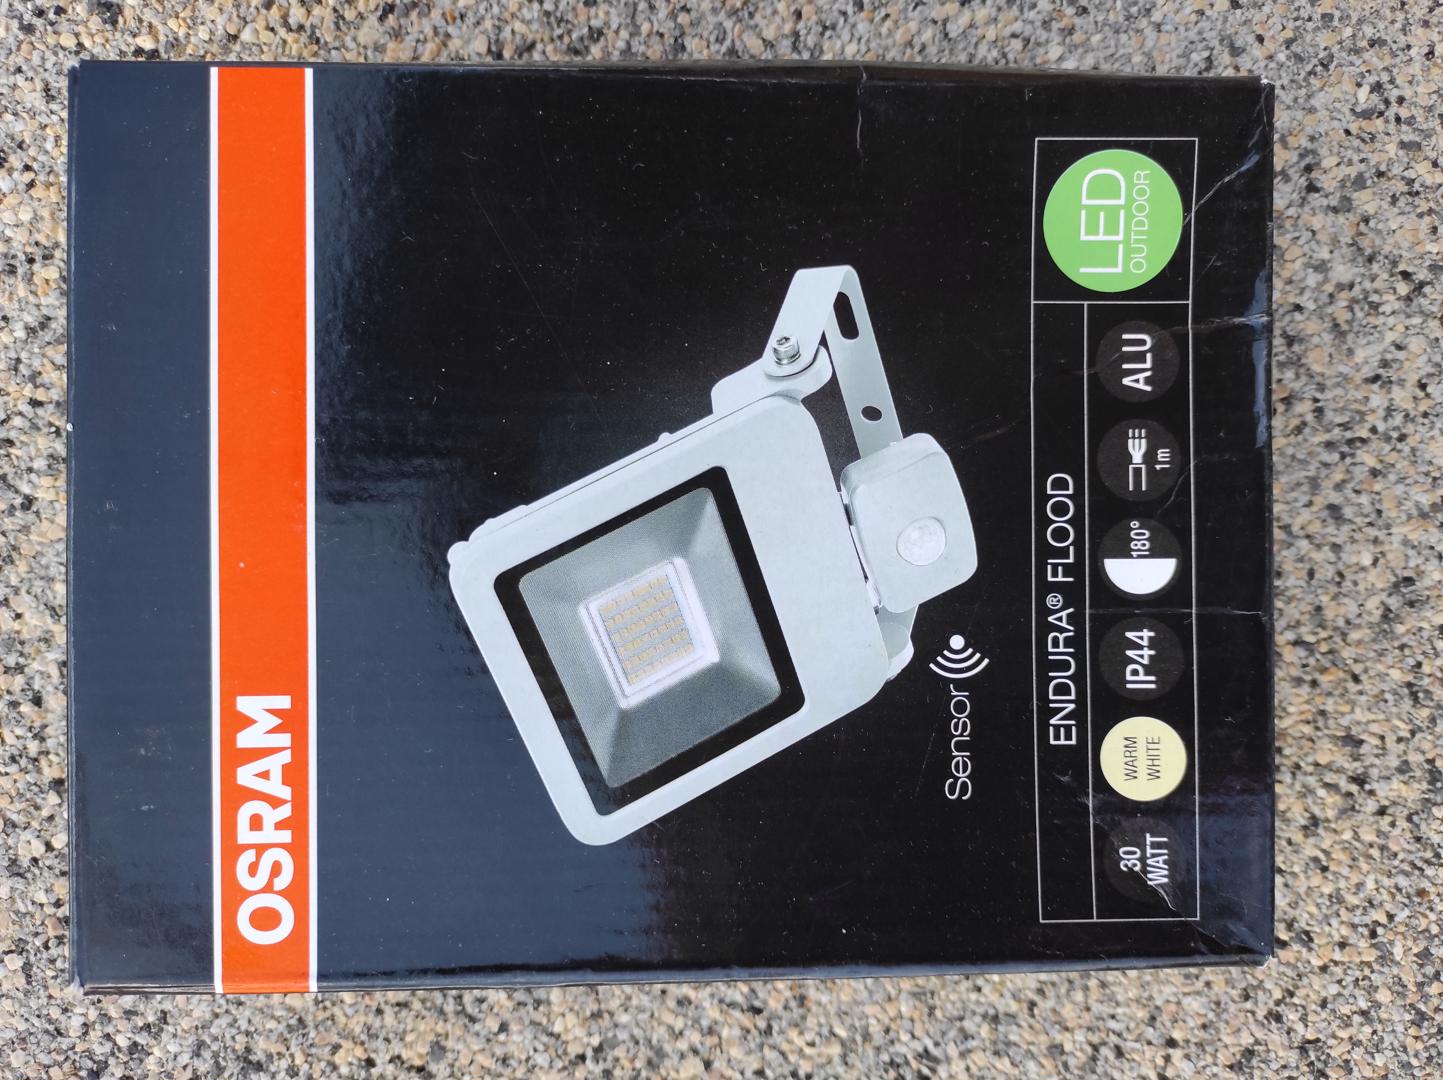 Venkovni LED osvetleni Osram se senzorem pohybu 30W - foto 1